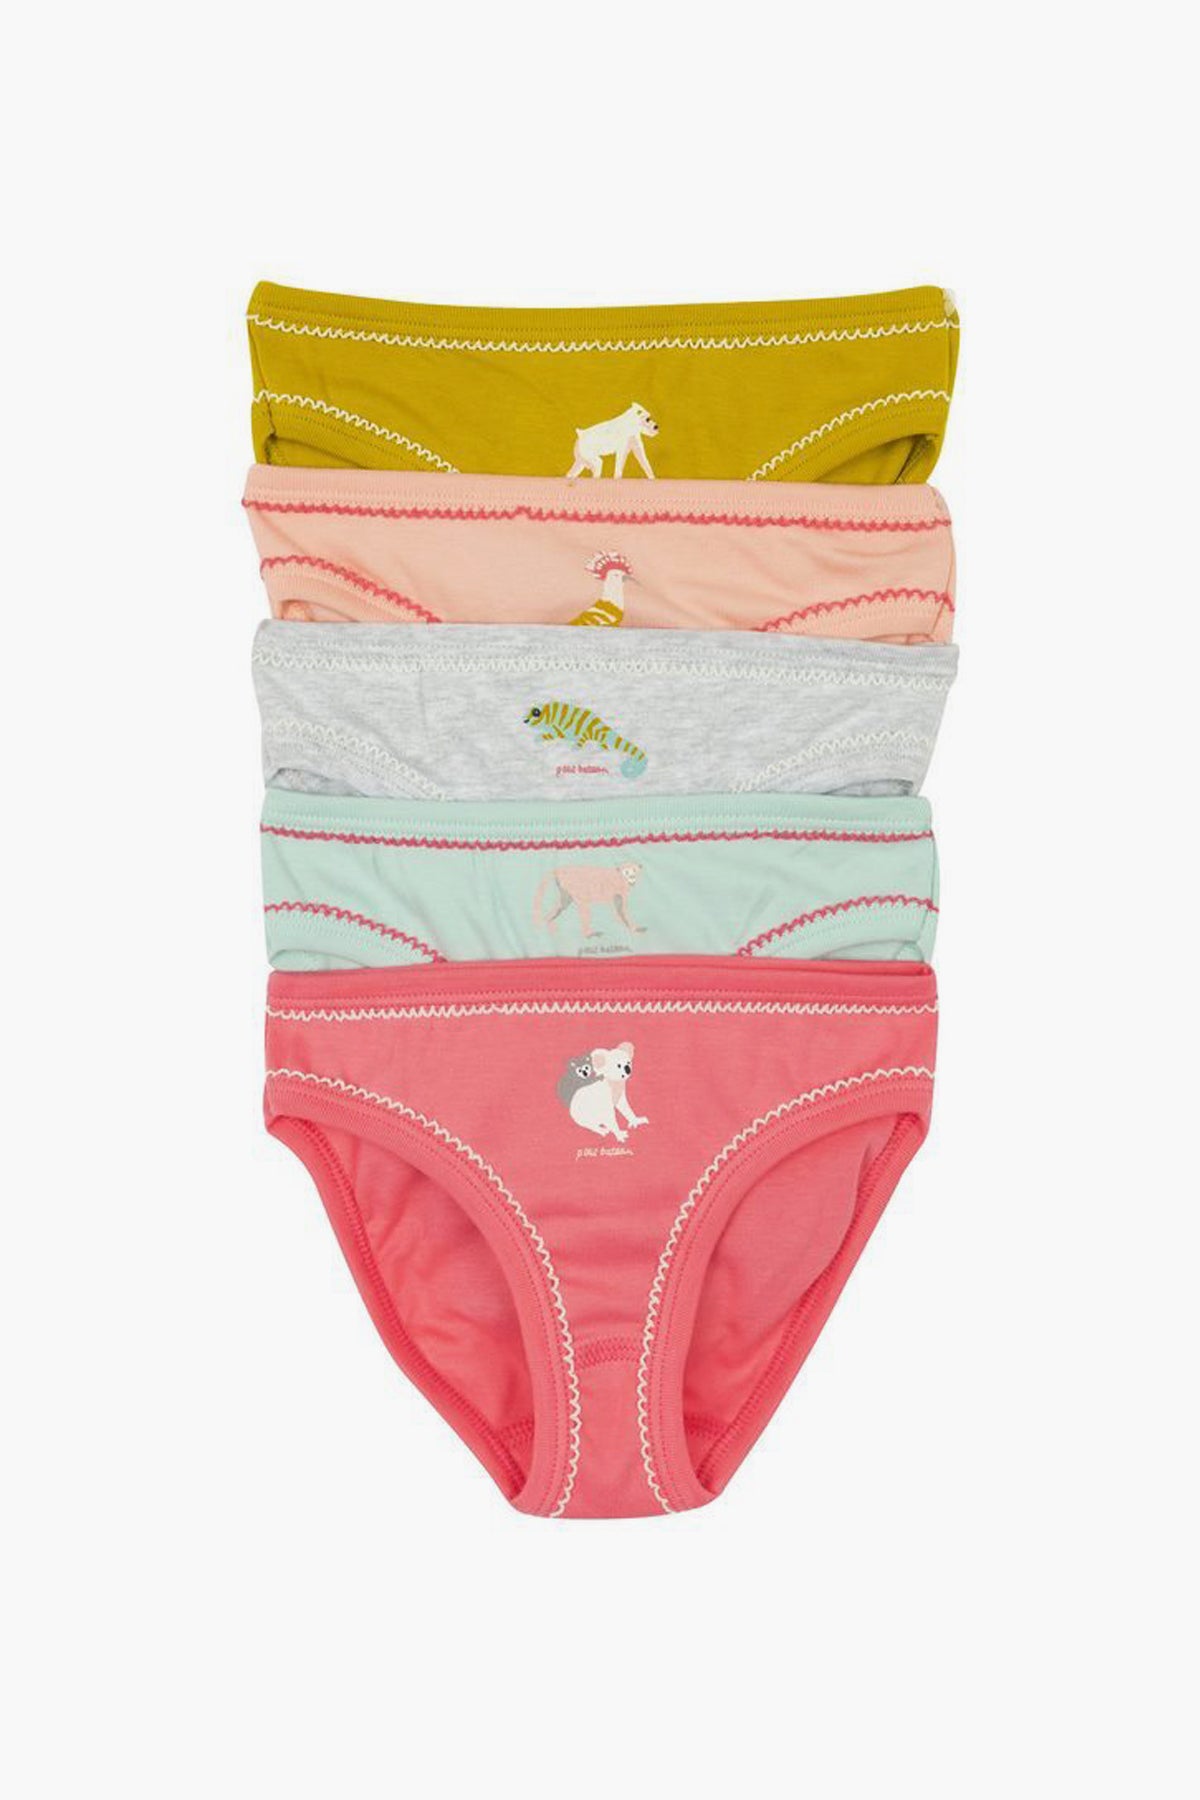 Petit Bateau 5-Pack Girls Underwear - Animals (Size 4 left)